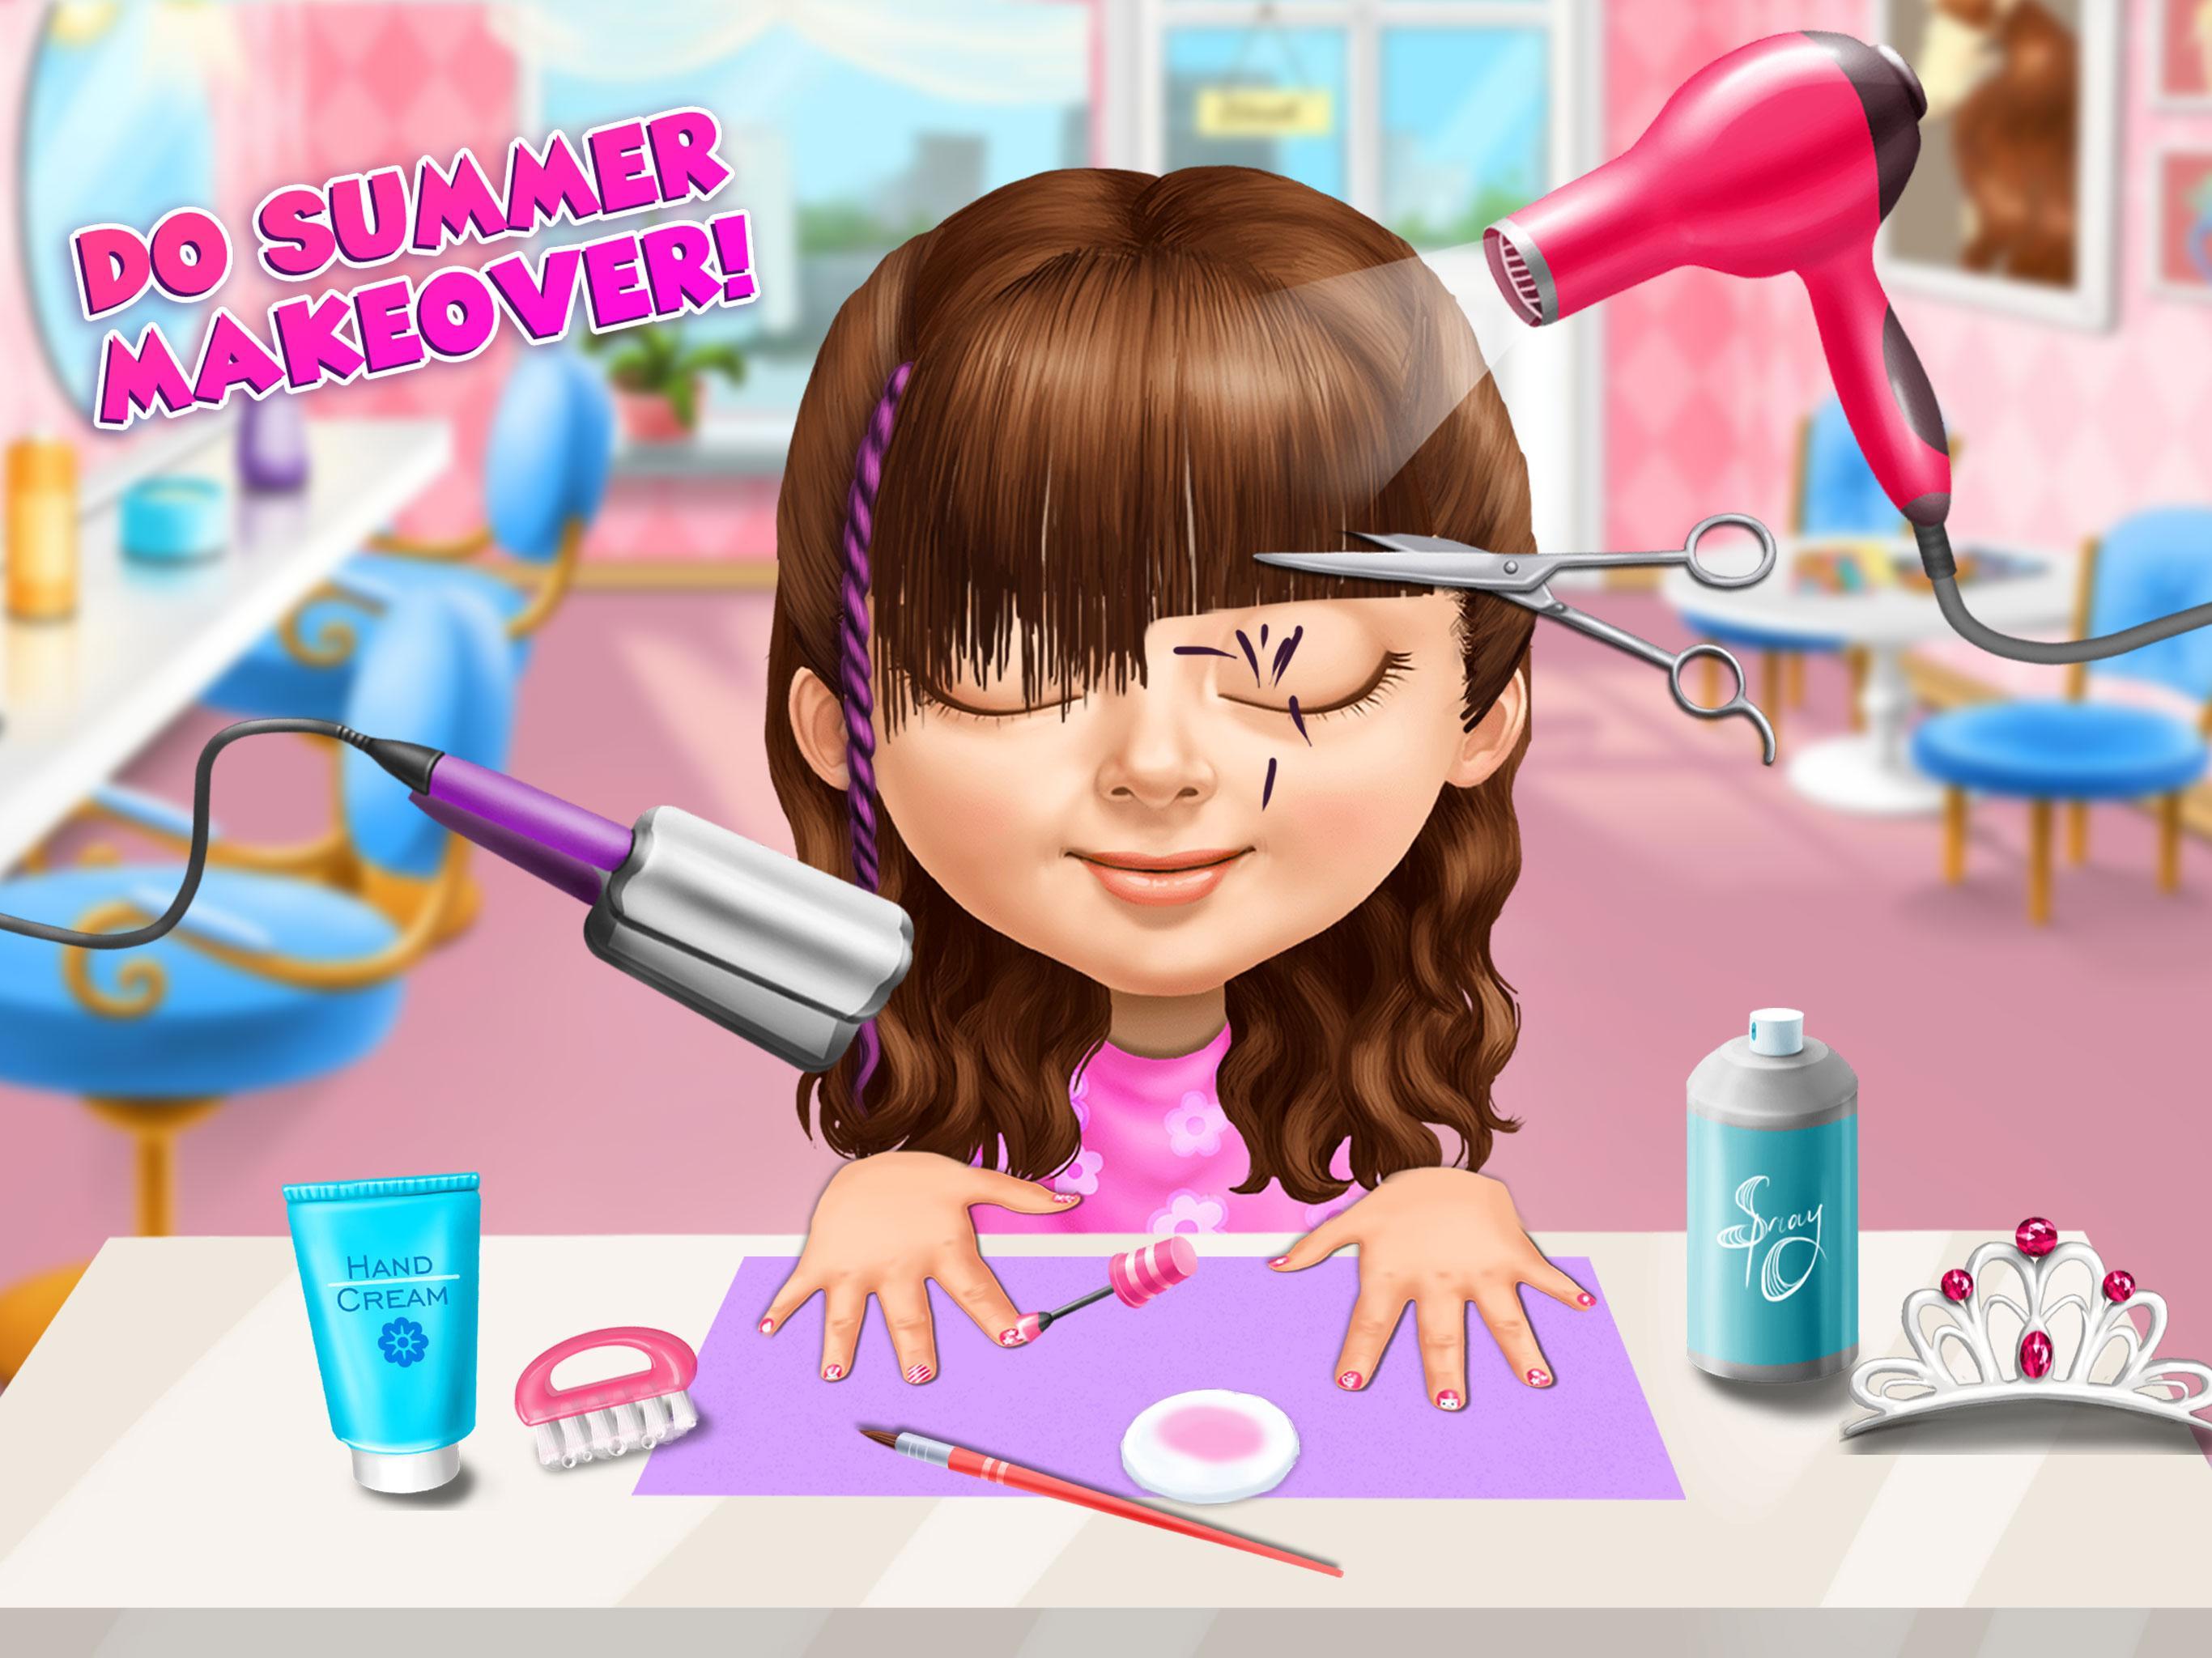 Sweet Baby Girl Summer Fun 2 - Sunny Makeover Game 7.0.1511 Screenshot 24